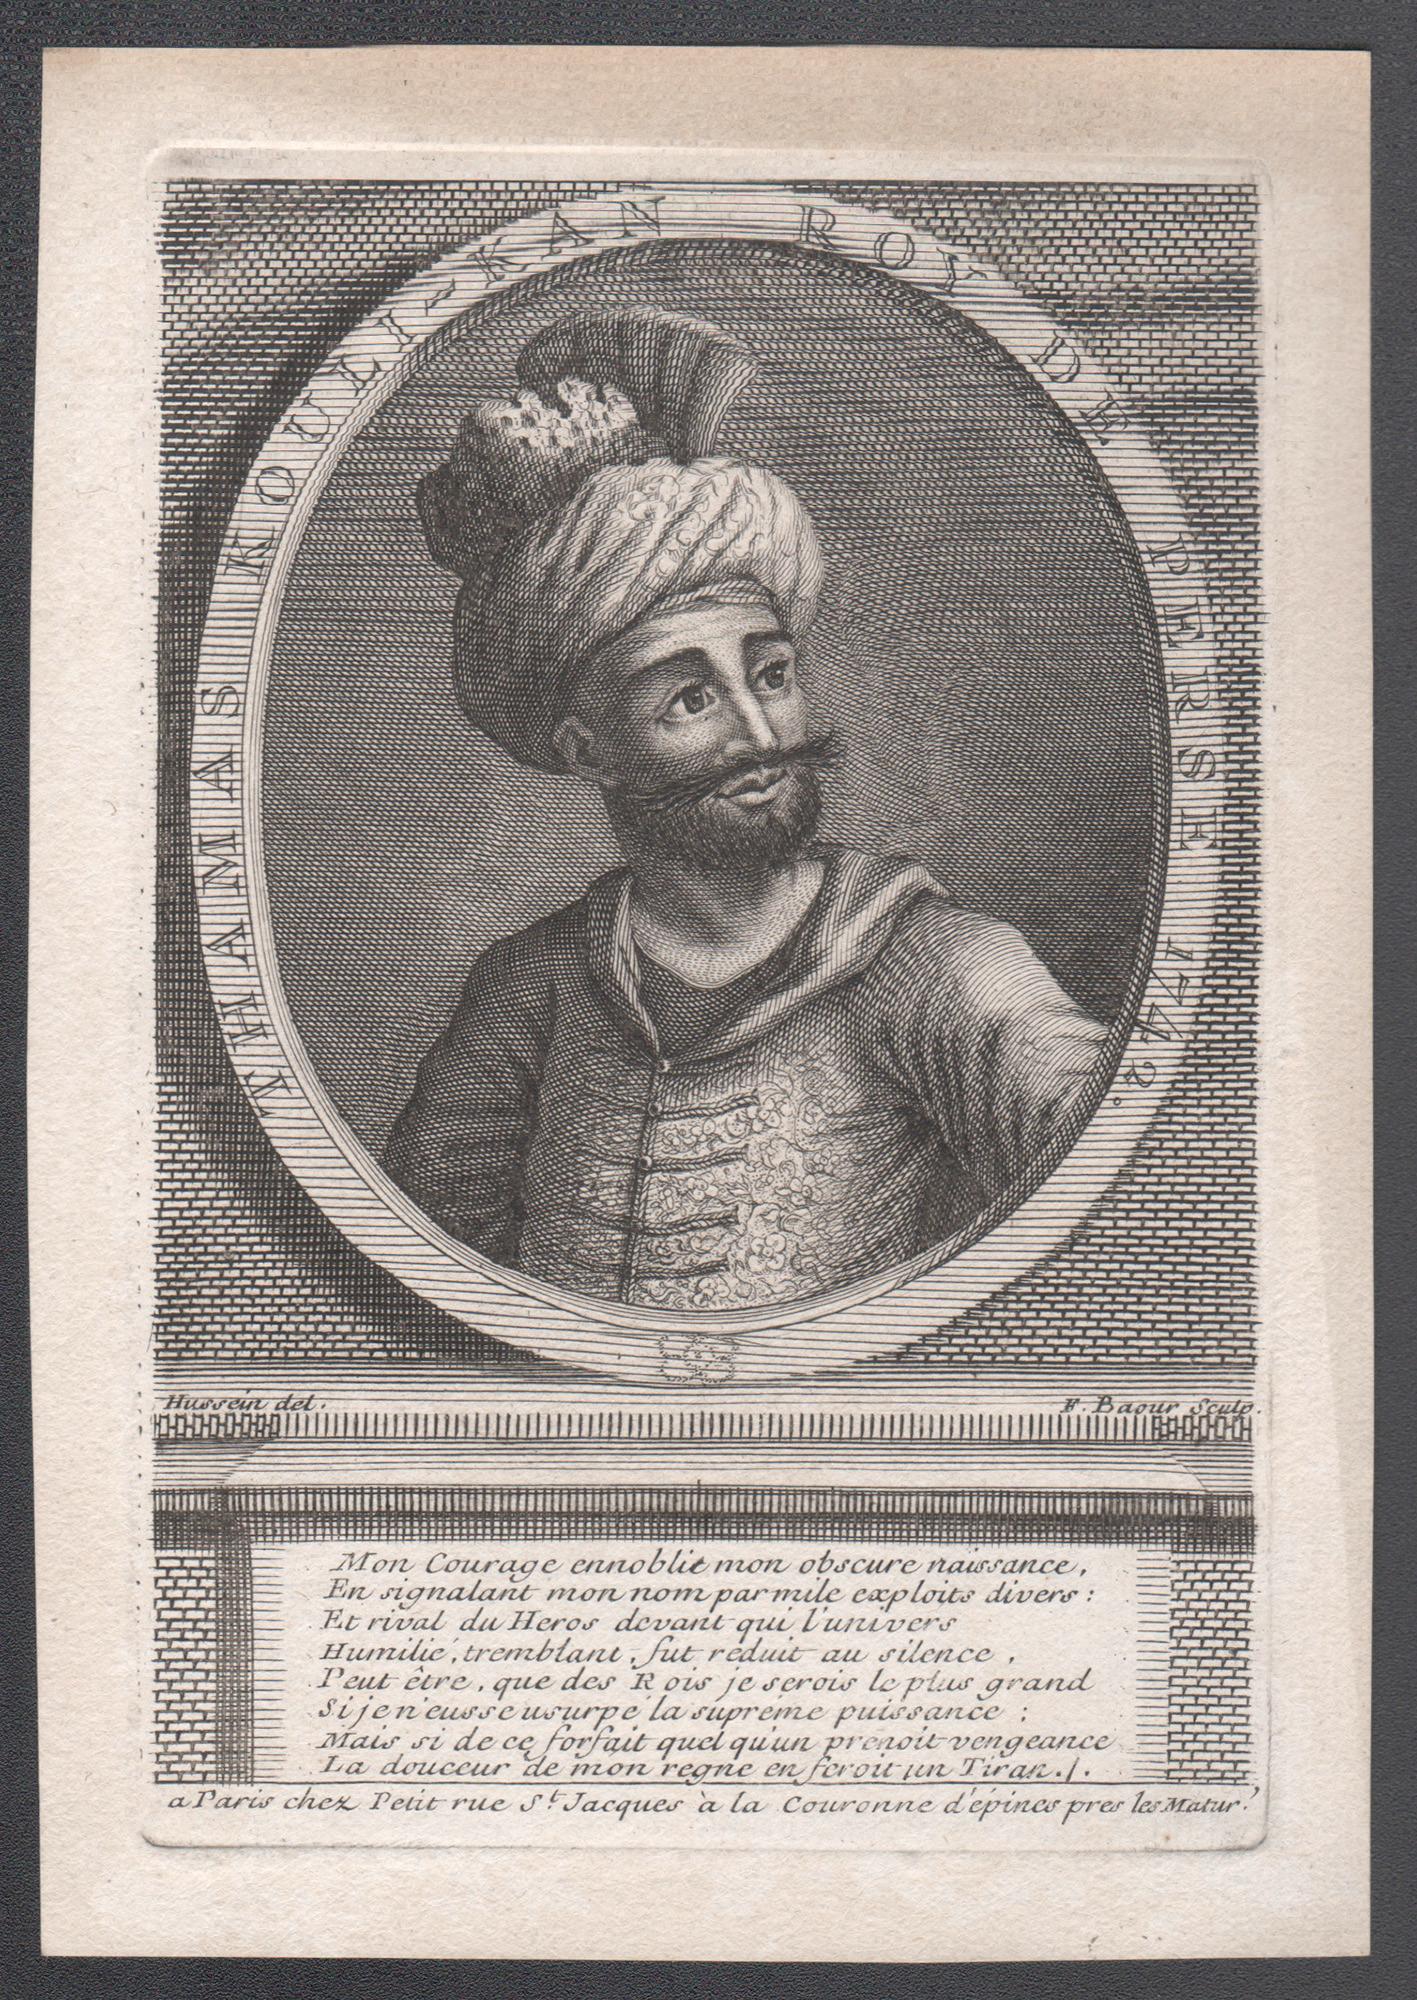 Thamas Kouli-Kan, Roy de Perse, 1742 (Nader Schah), Porträtstiche, 1742 – Print von F Baour after Hussain